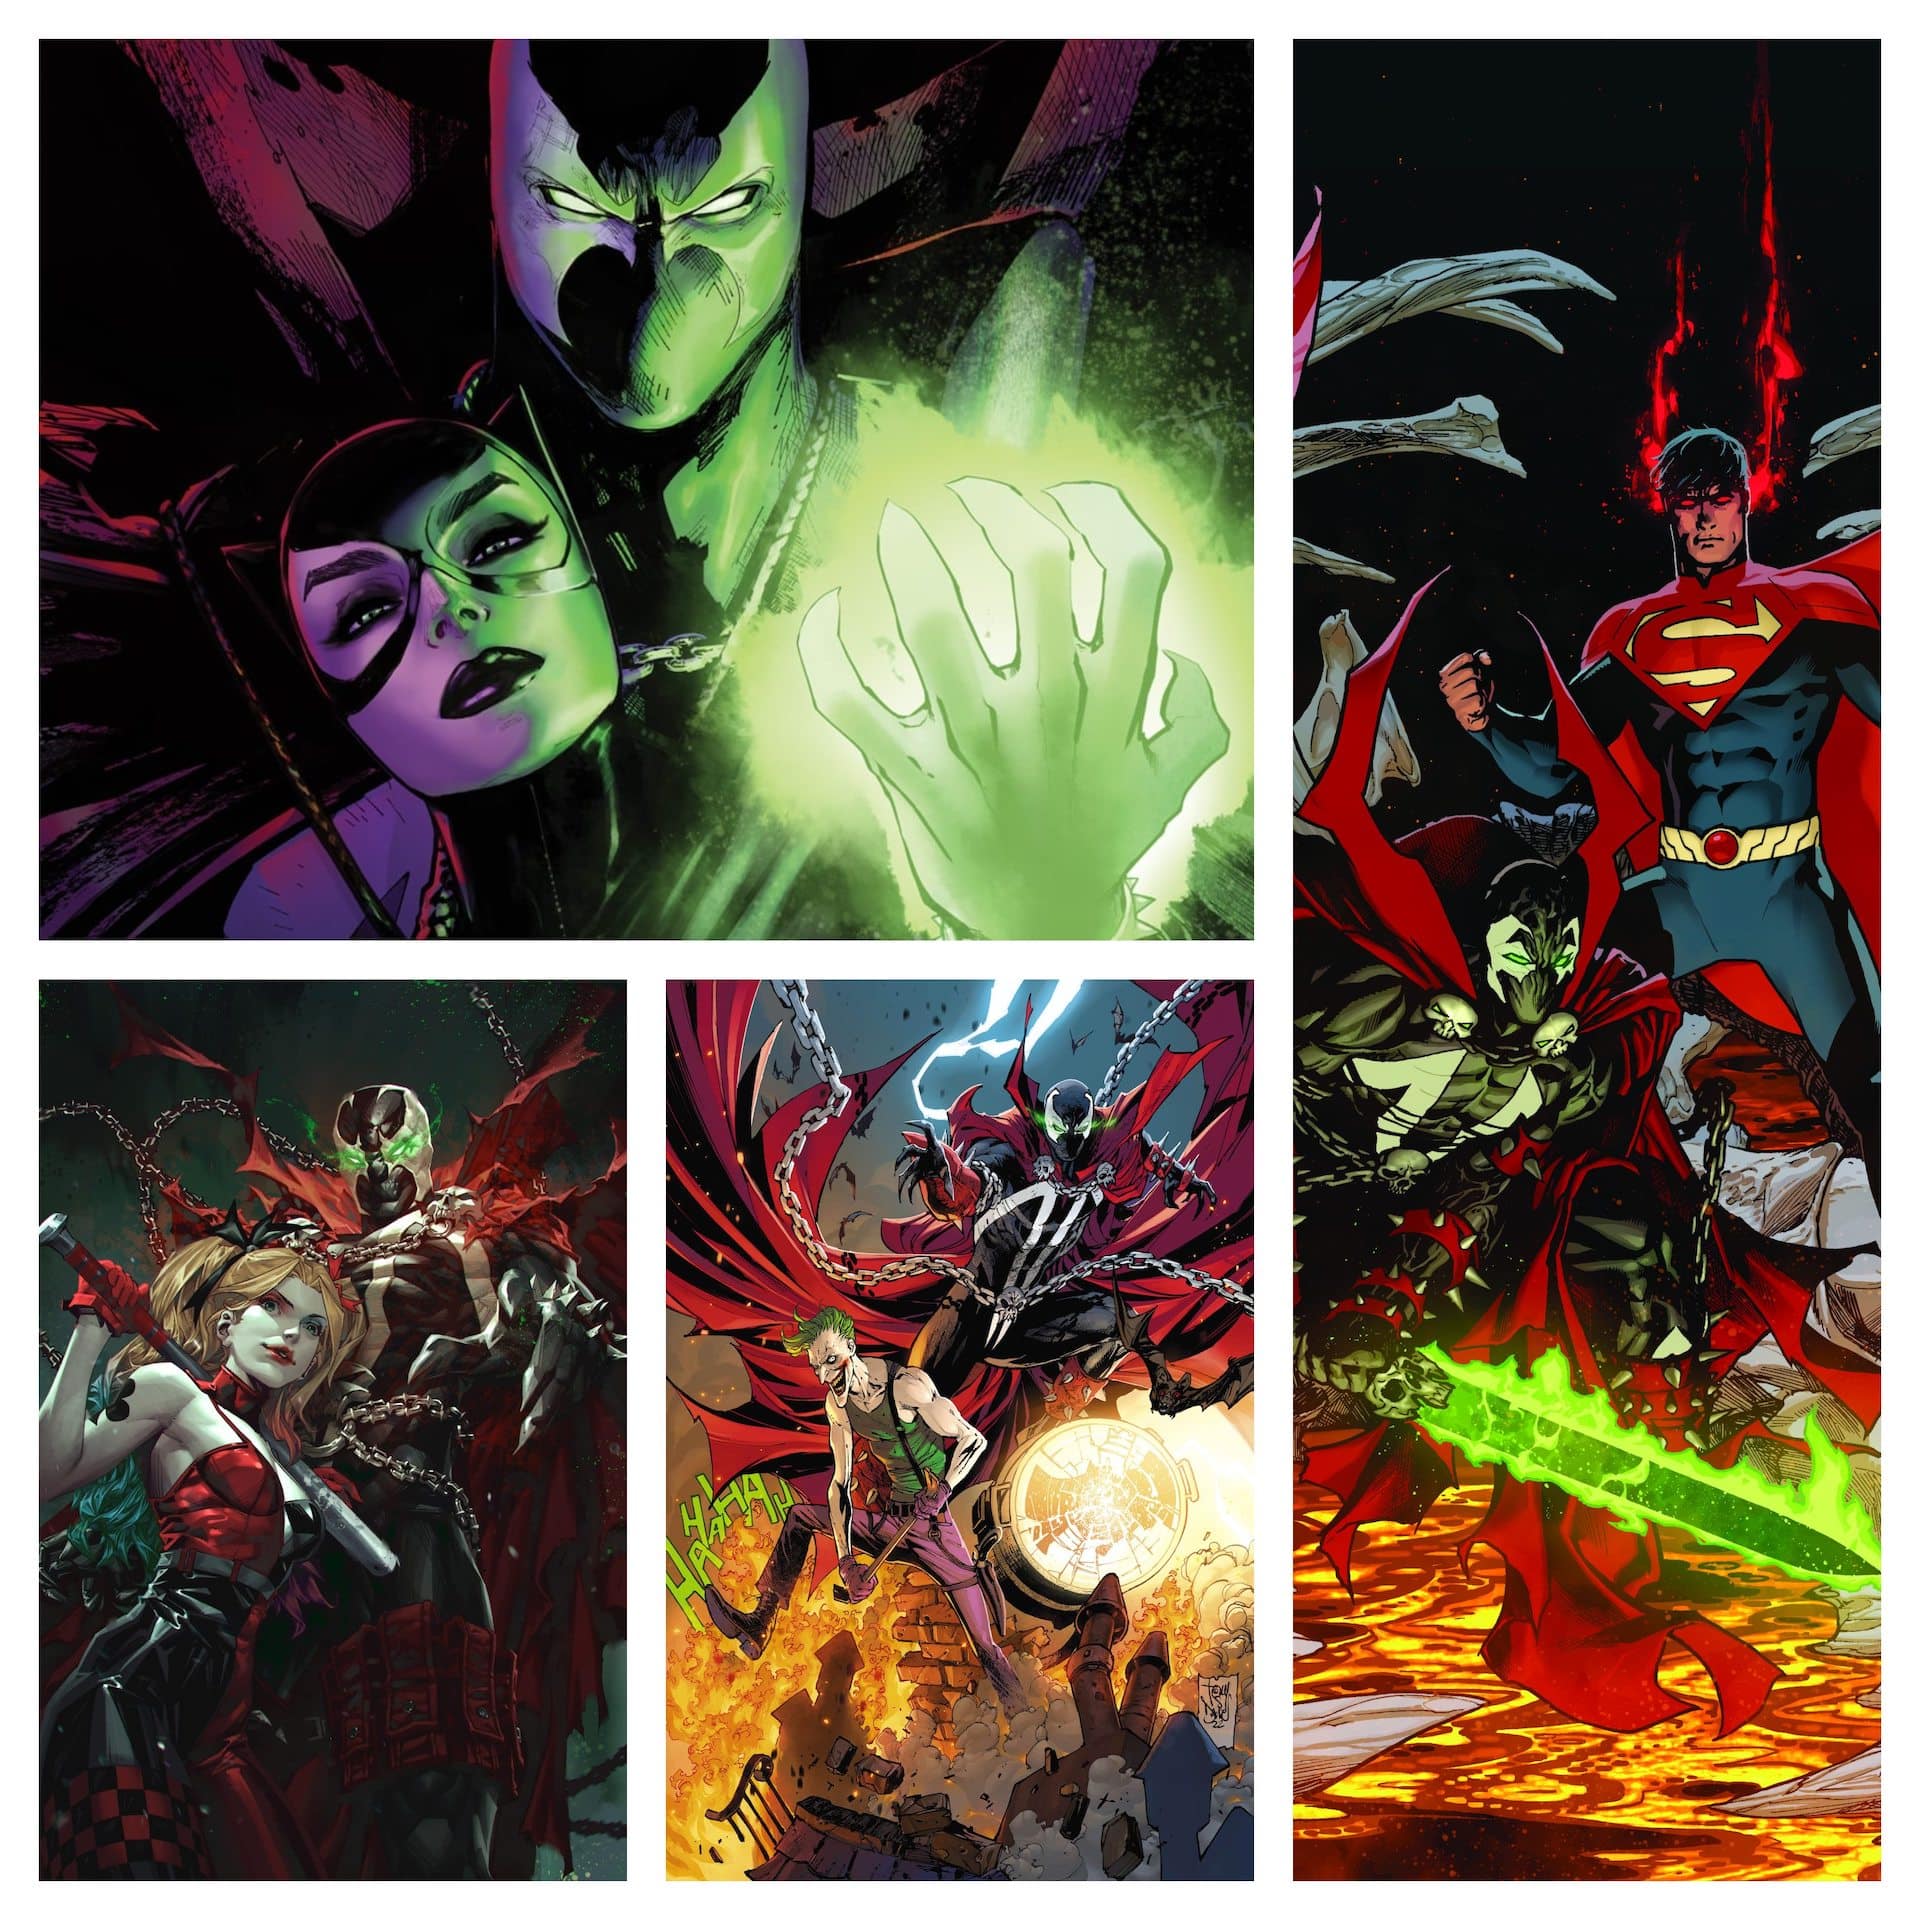 DC Comics reveal DC team ups via Spawn-themed variant covers